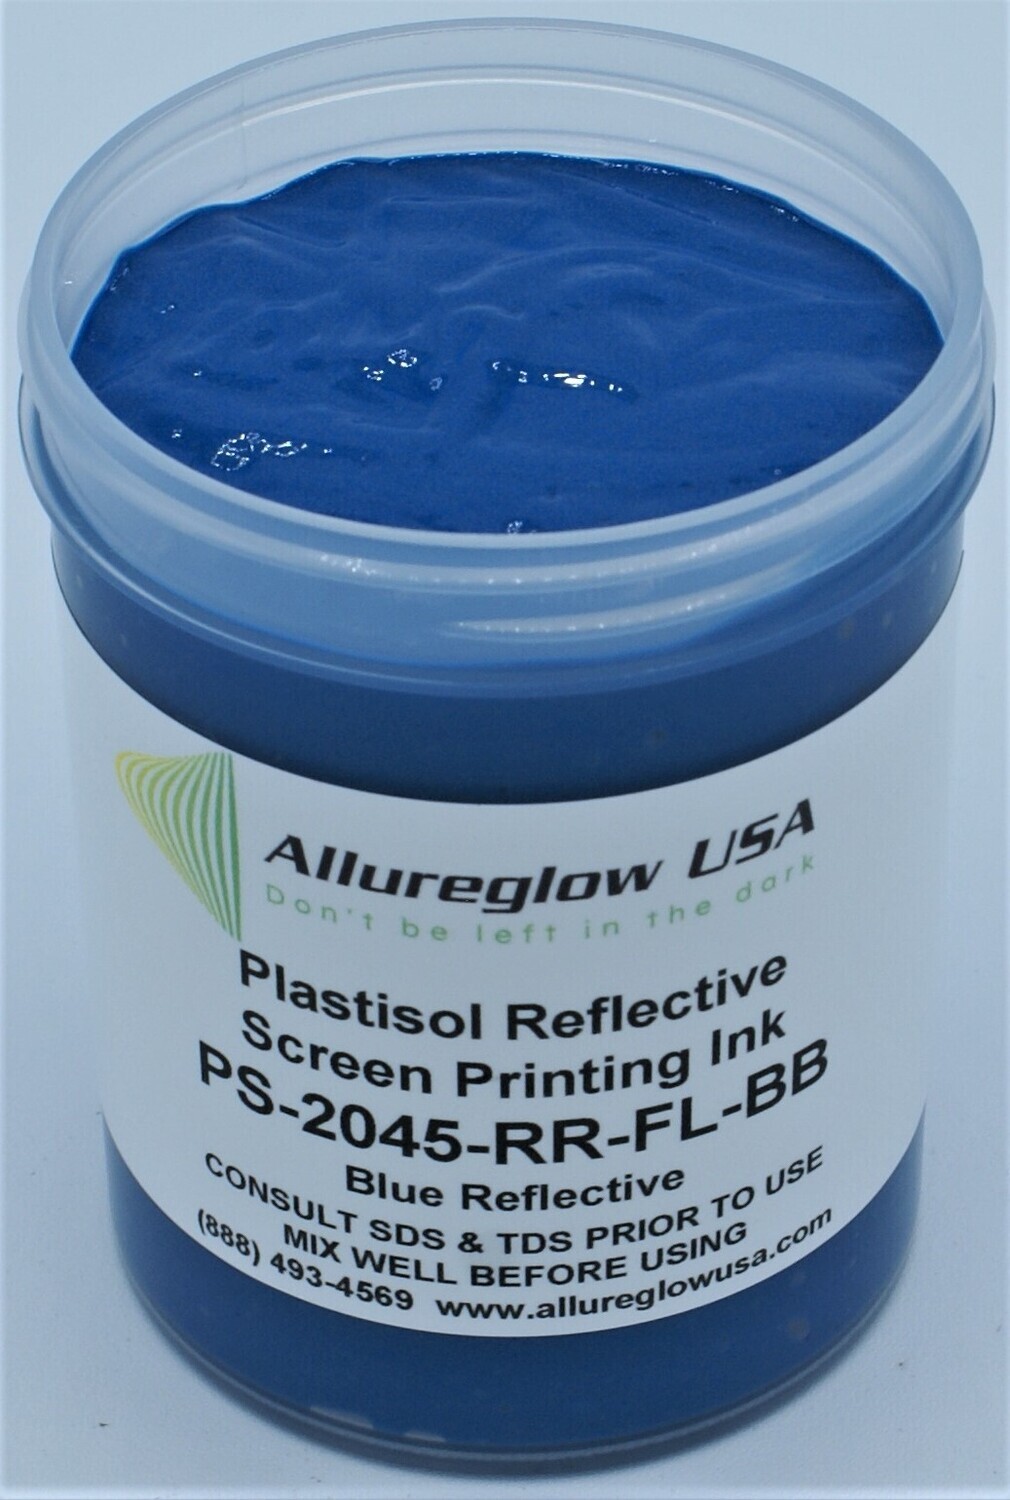 PS-2045-RR-FL-BB-8OZ  PLASTISOL FLUORESCENT BLUE REFLECTIVE INK 8OZ